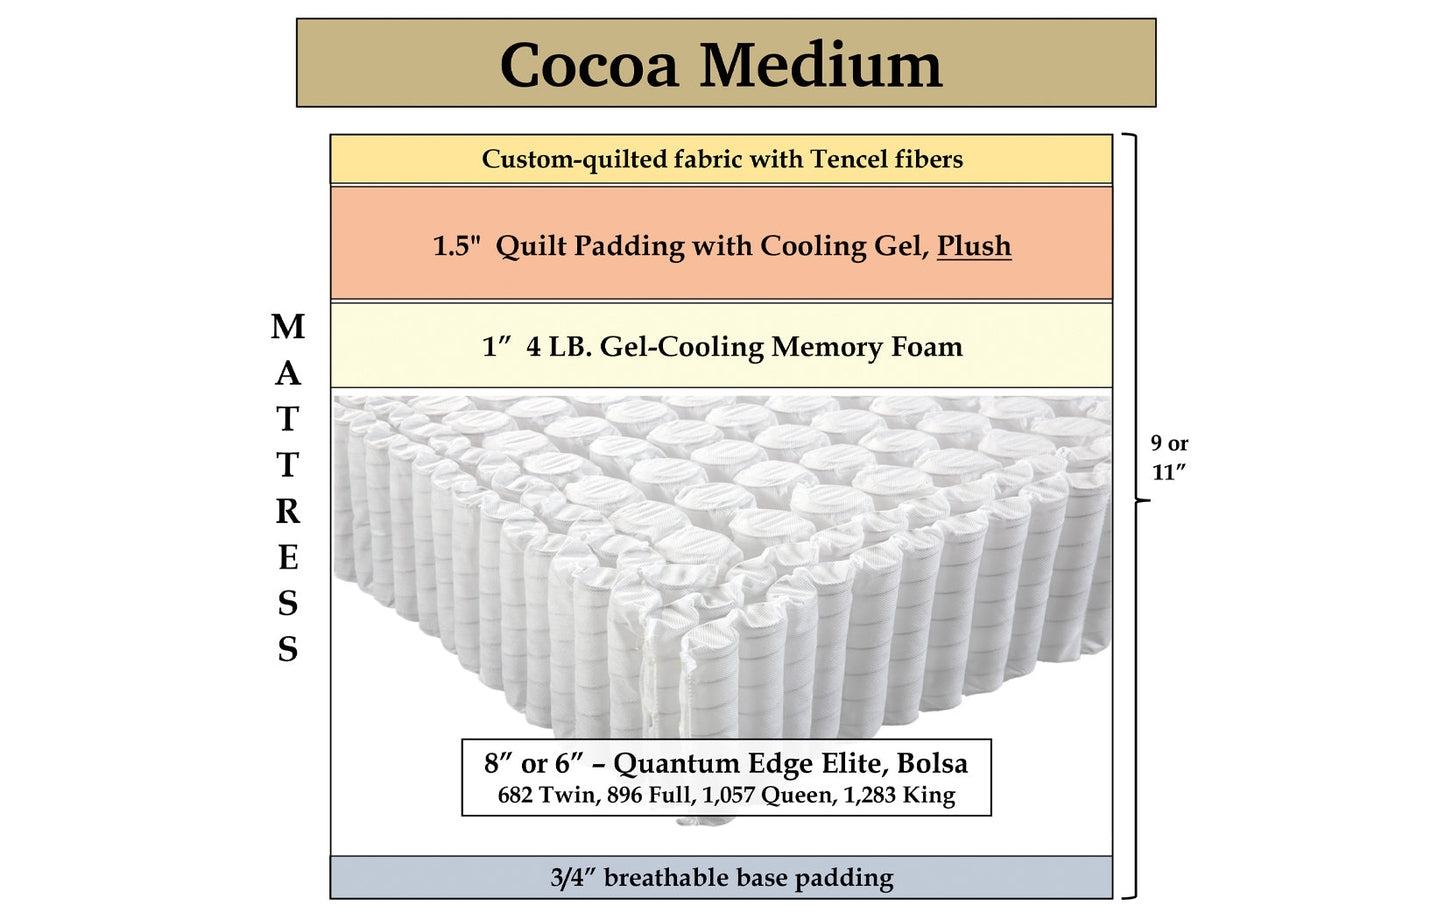 Cocoa Medium, 33.5" x 75" x 9" mattress